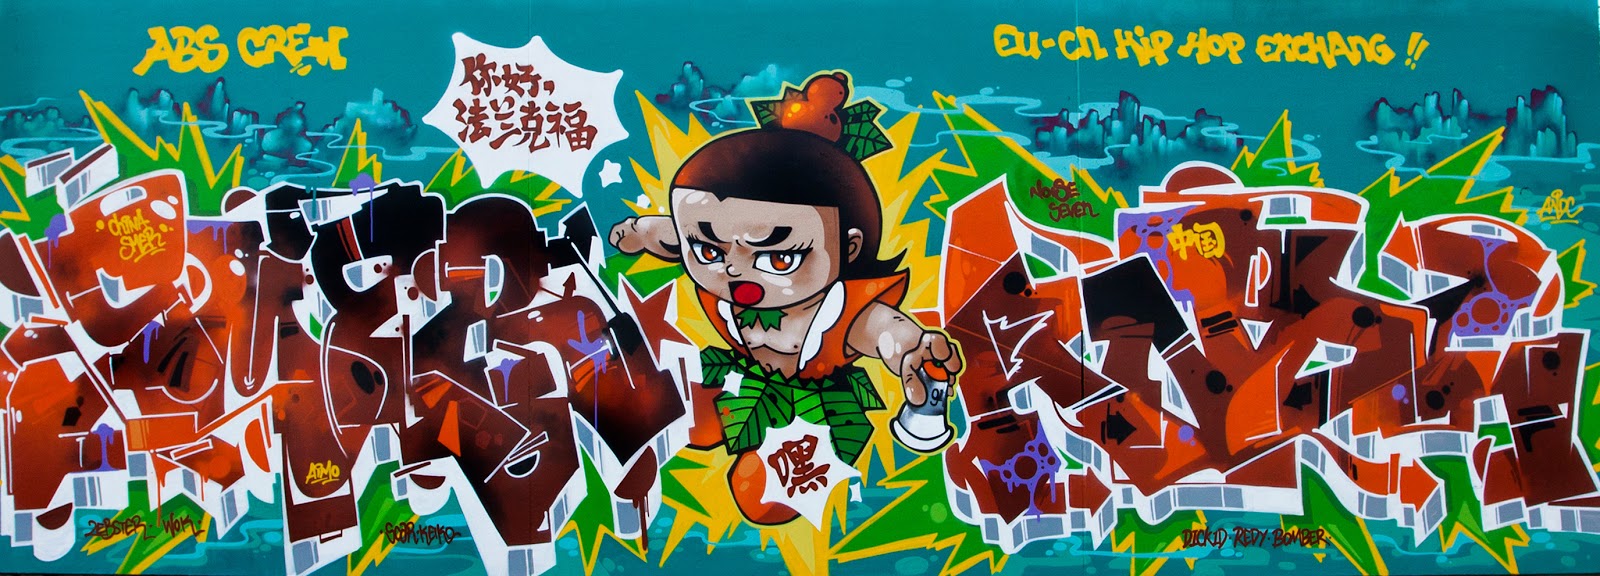 Ultrapive Graffiti By Riot